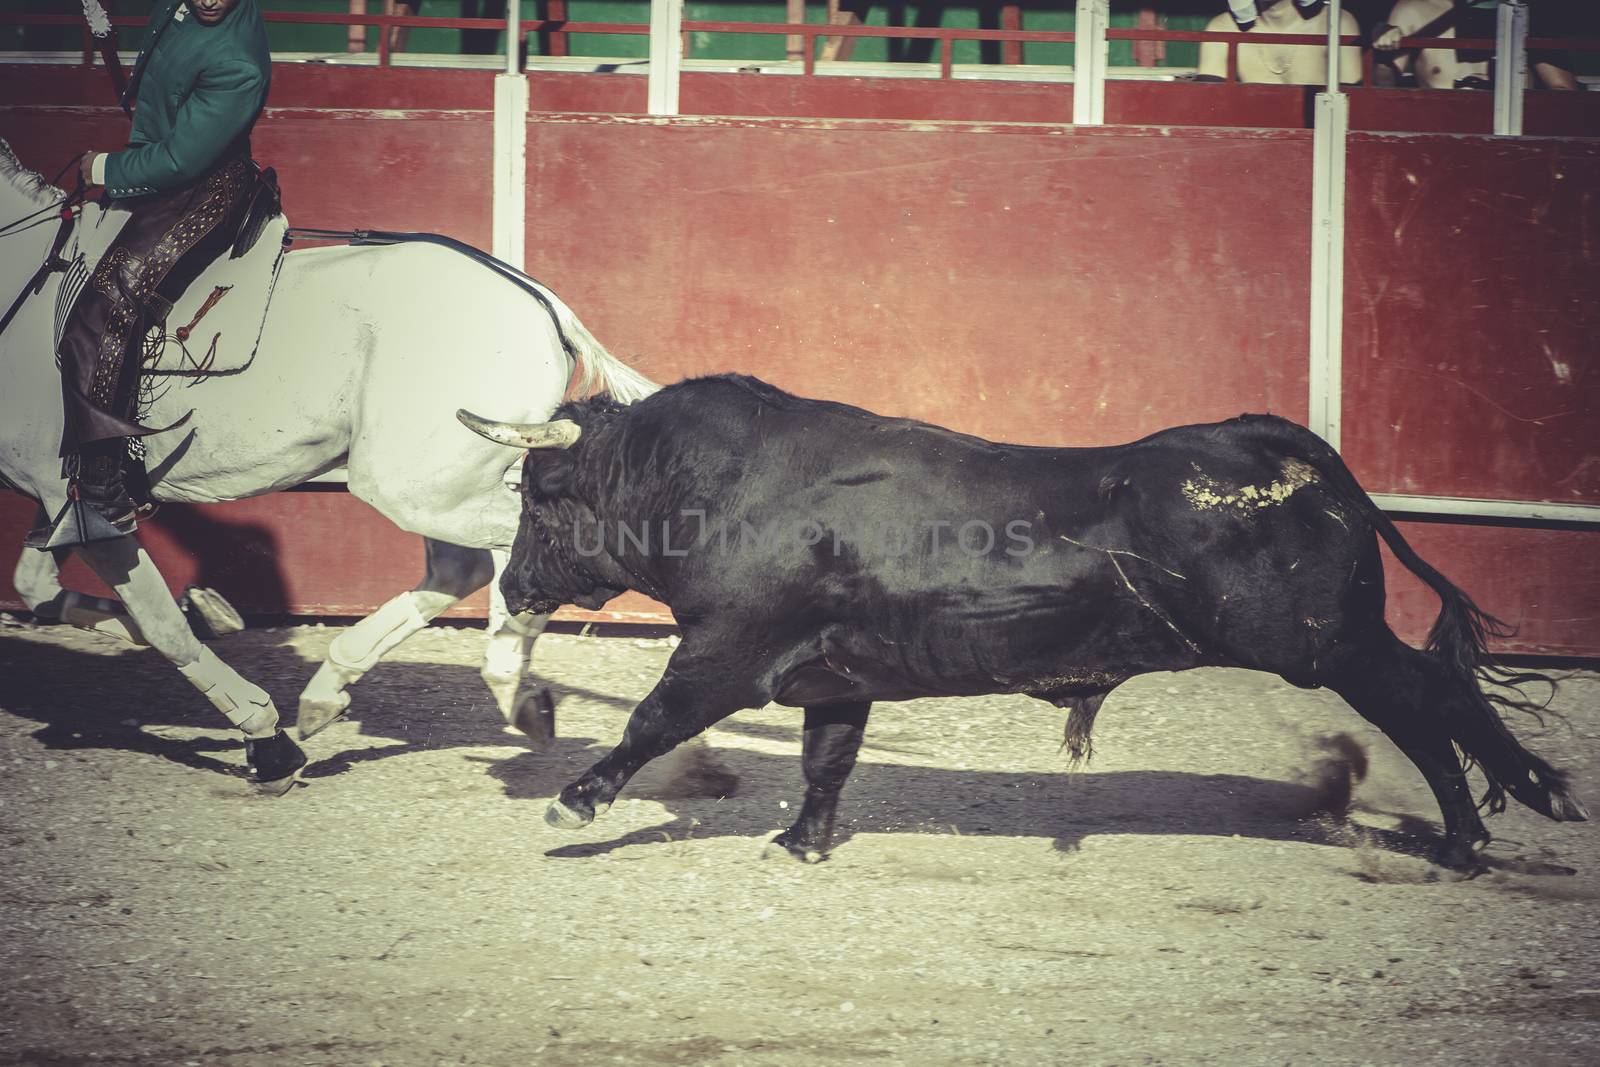 bullfight, traditional Spanish party where a matador fighting a bull